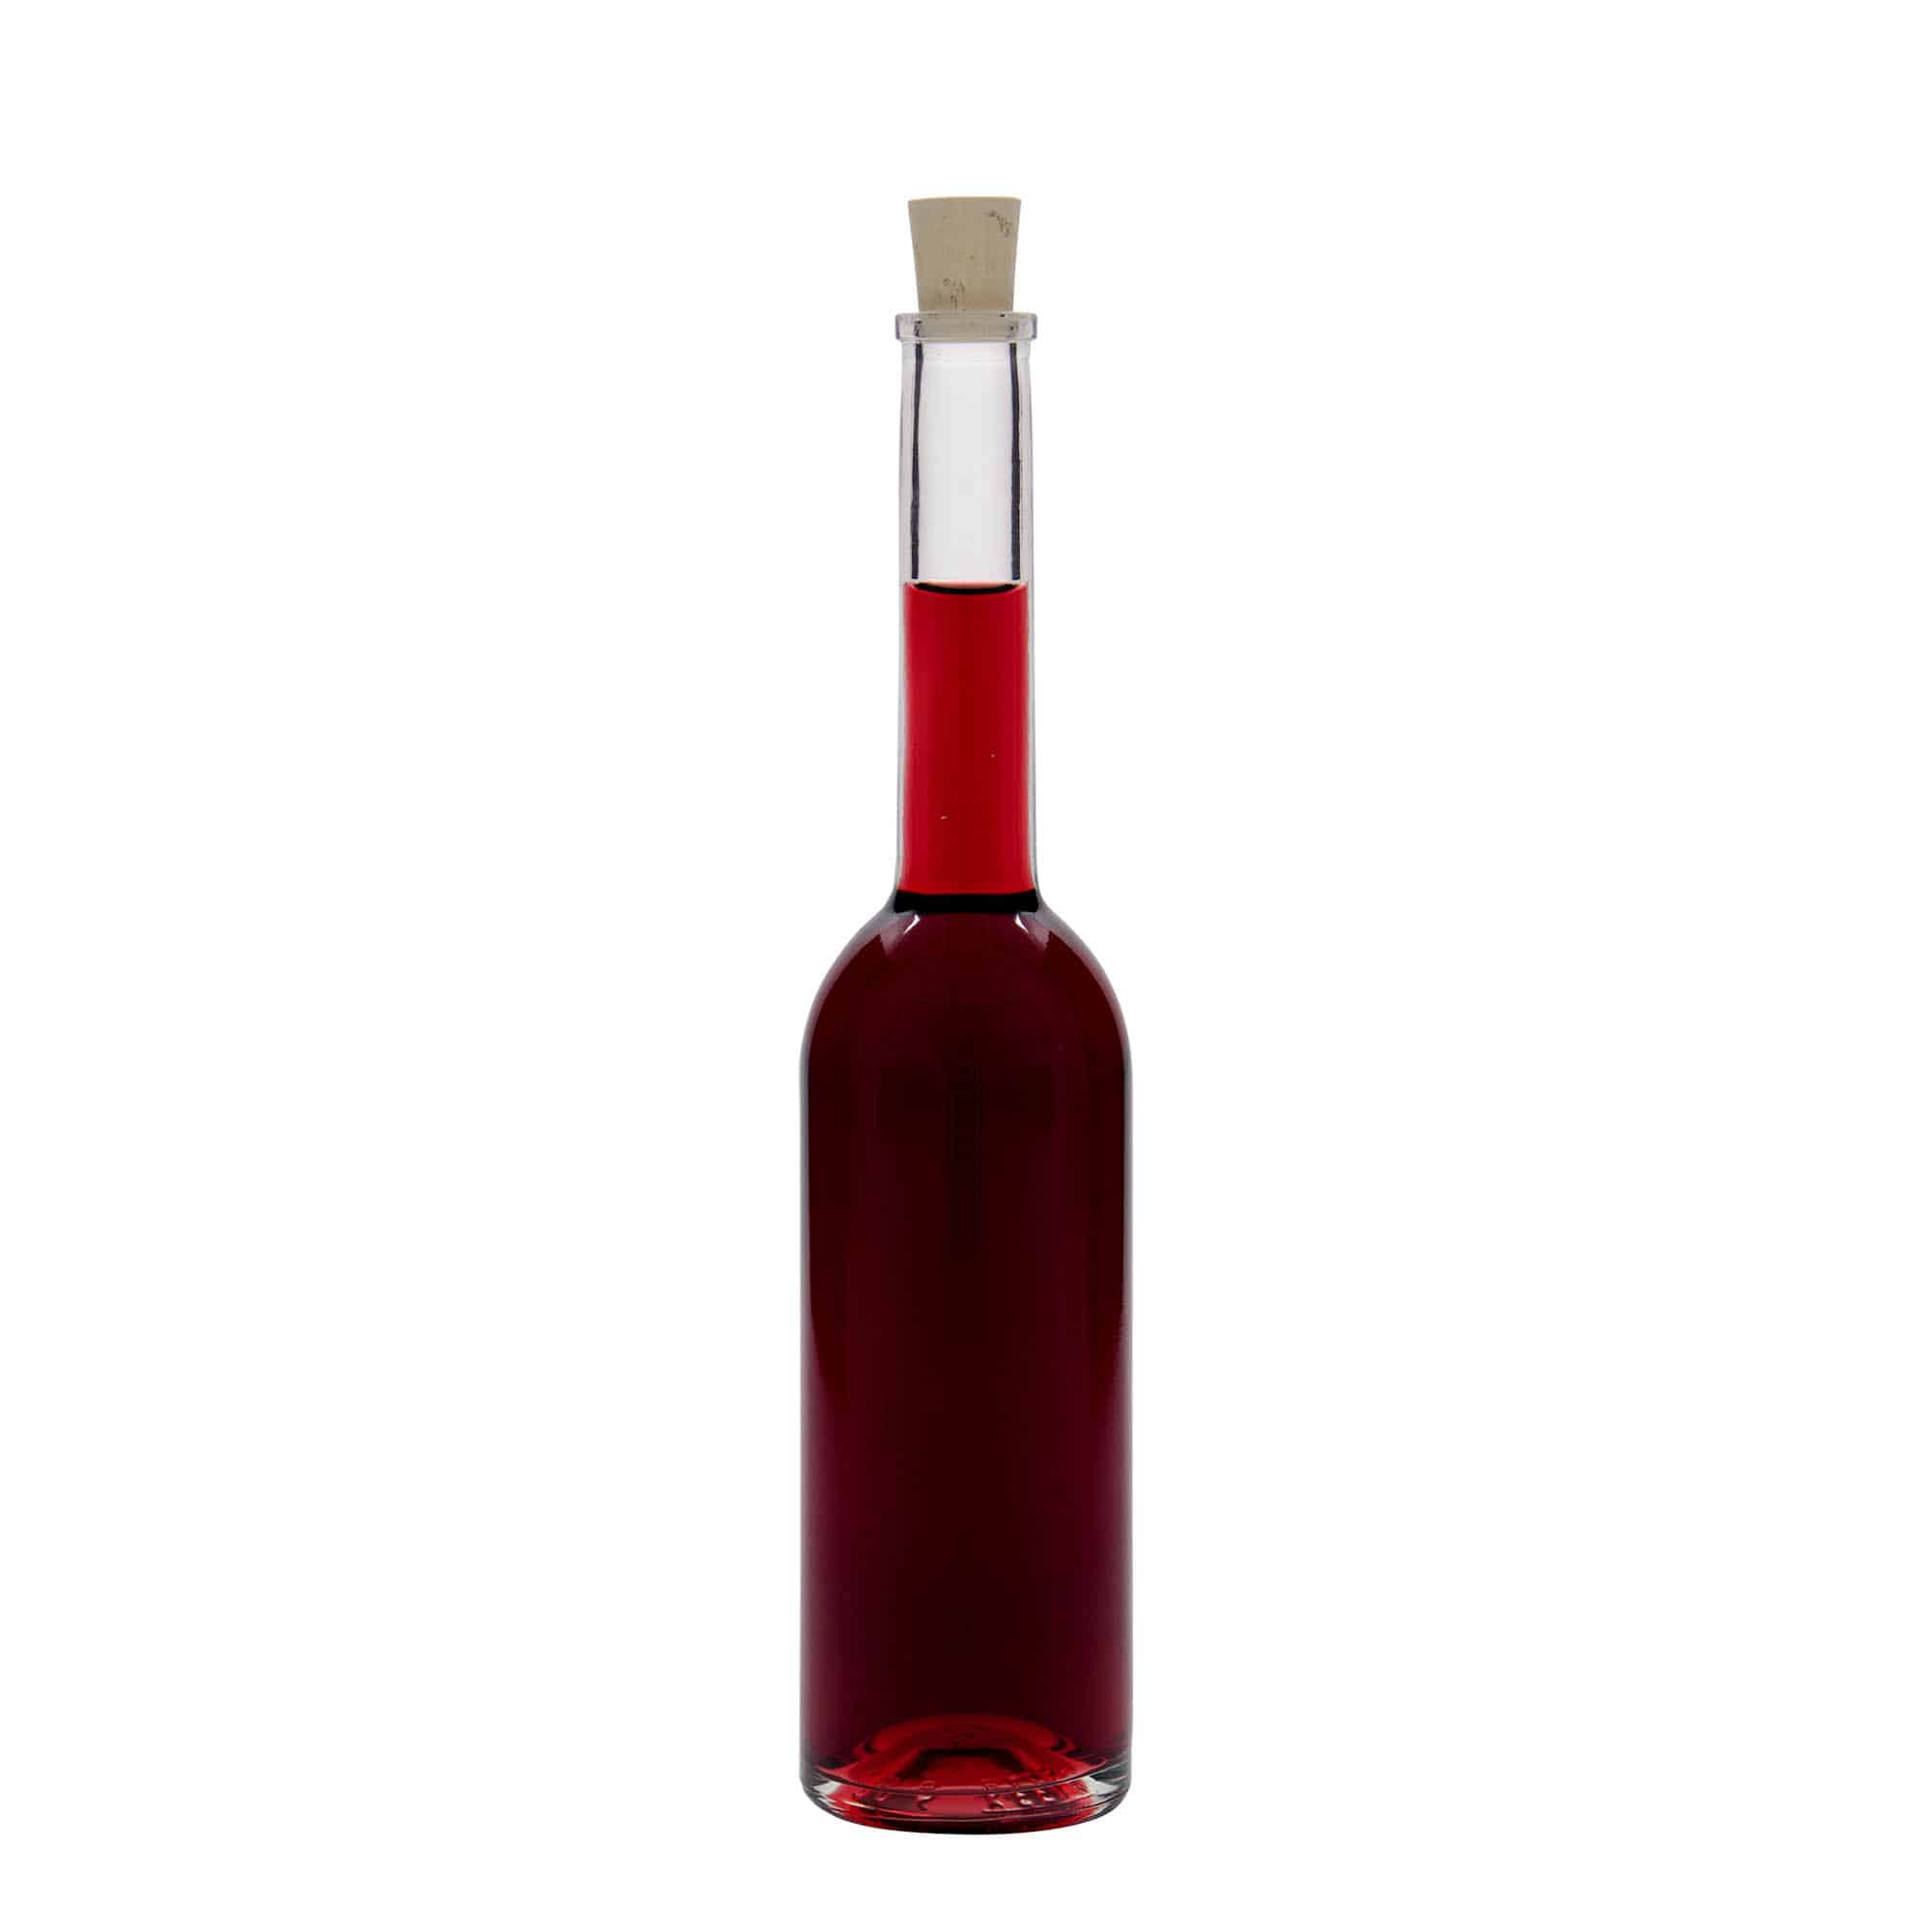 200 ml glass bottle 'Opera', closure: cork